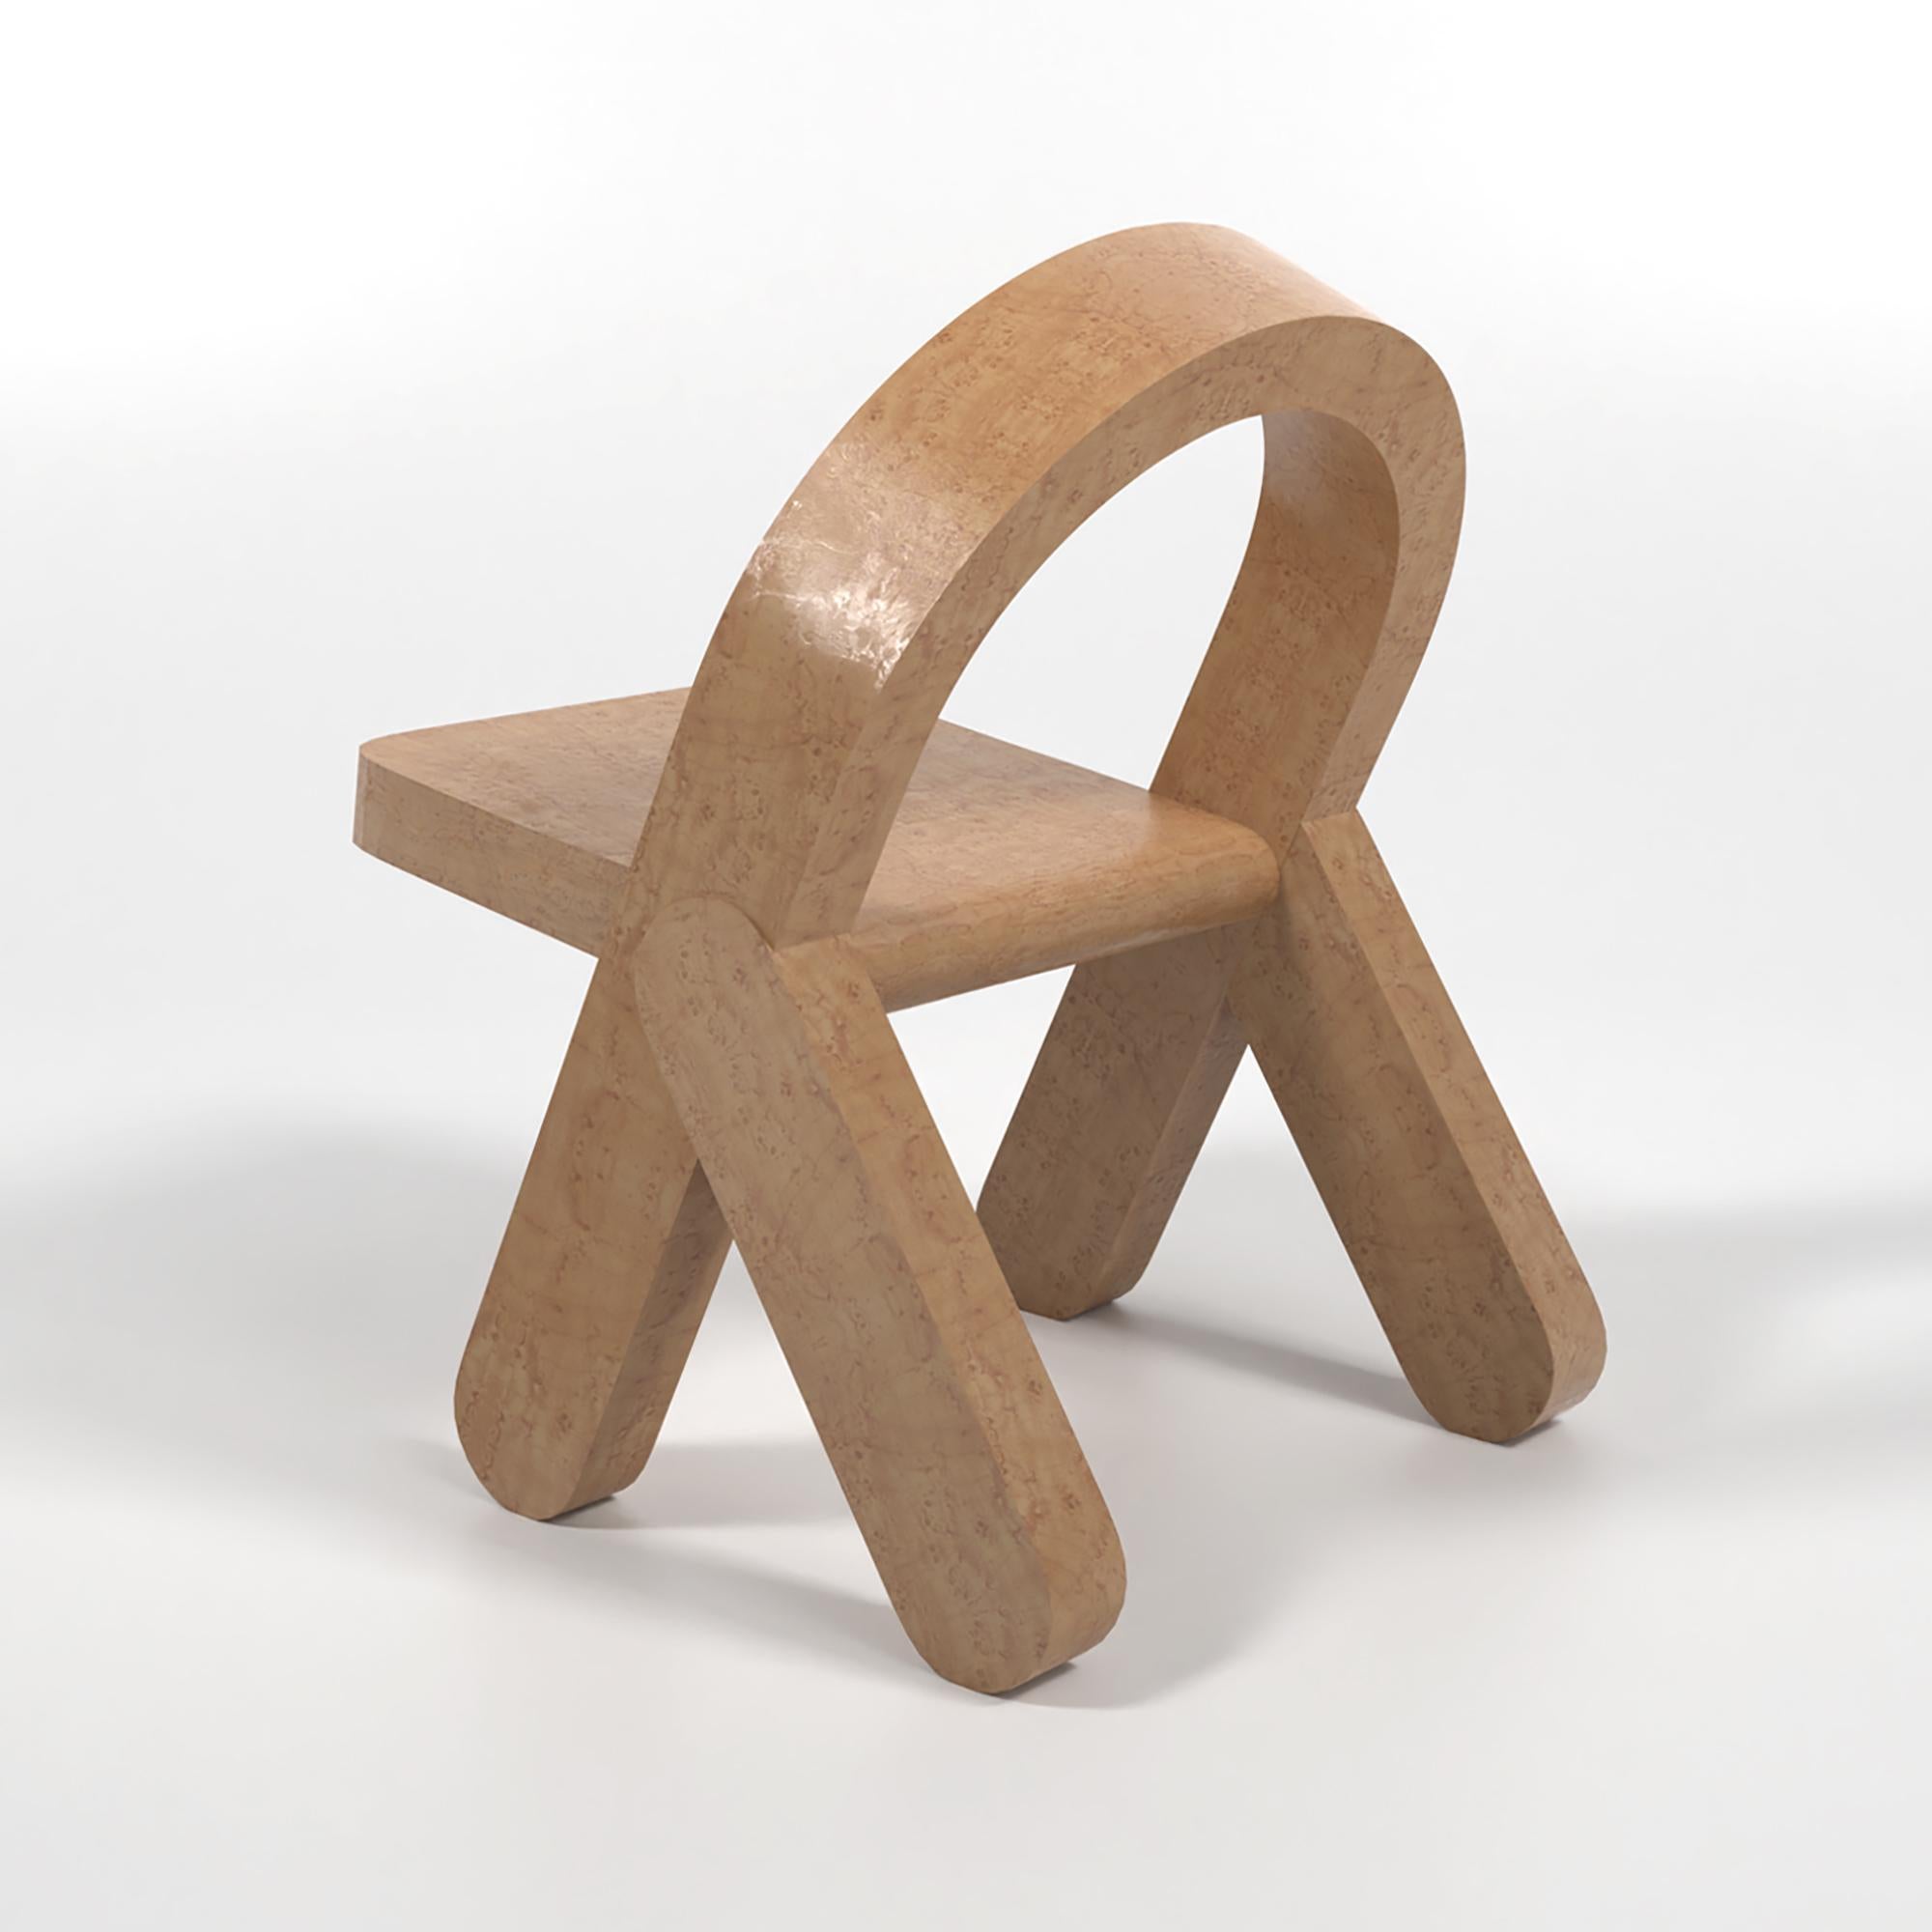 Modern Foldont Chair in Plywood with Birdseye Maple Veneer by JUMBO NYC